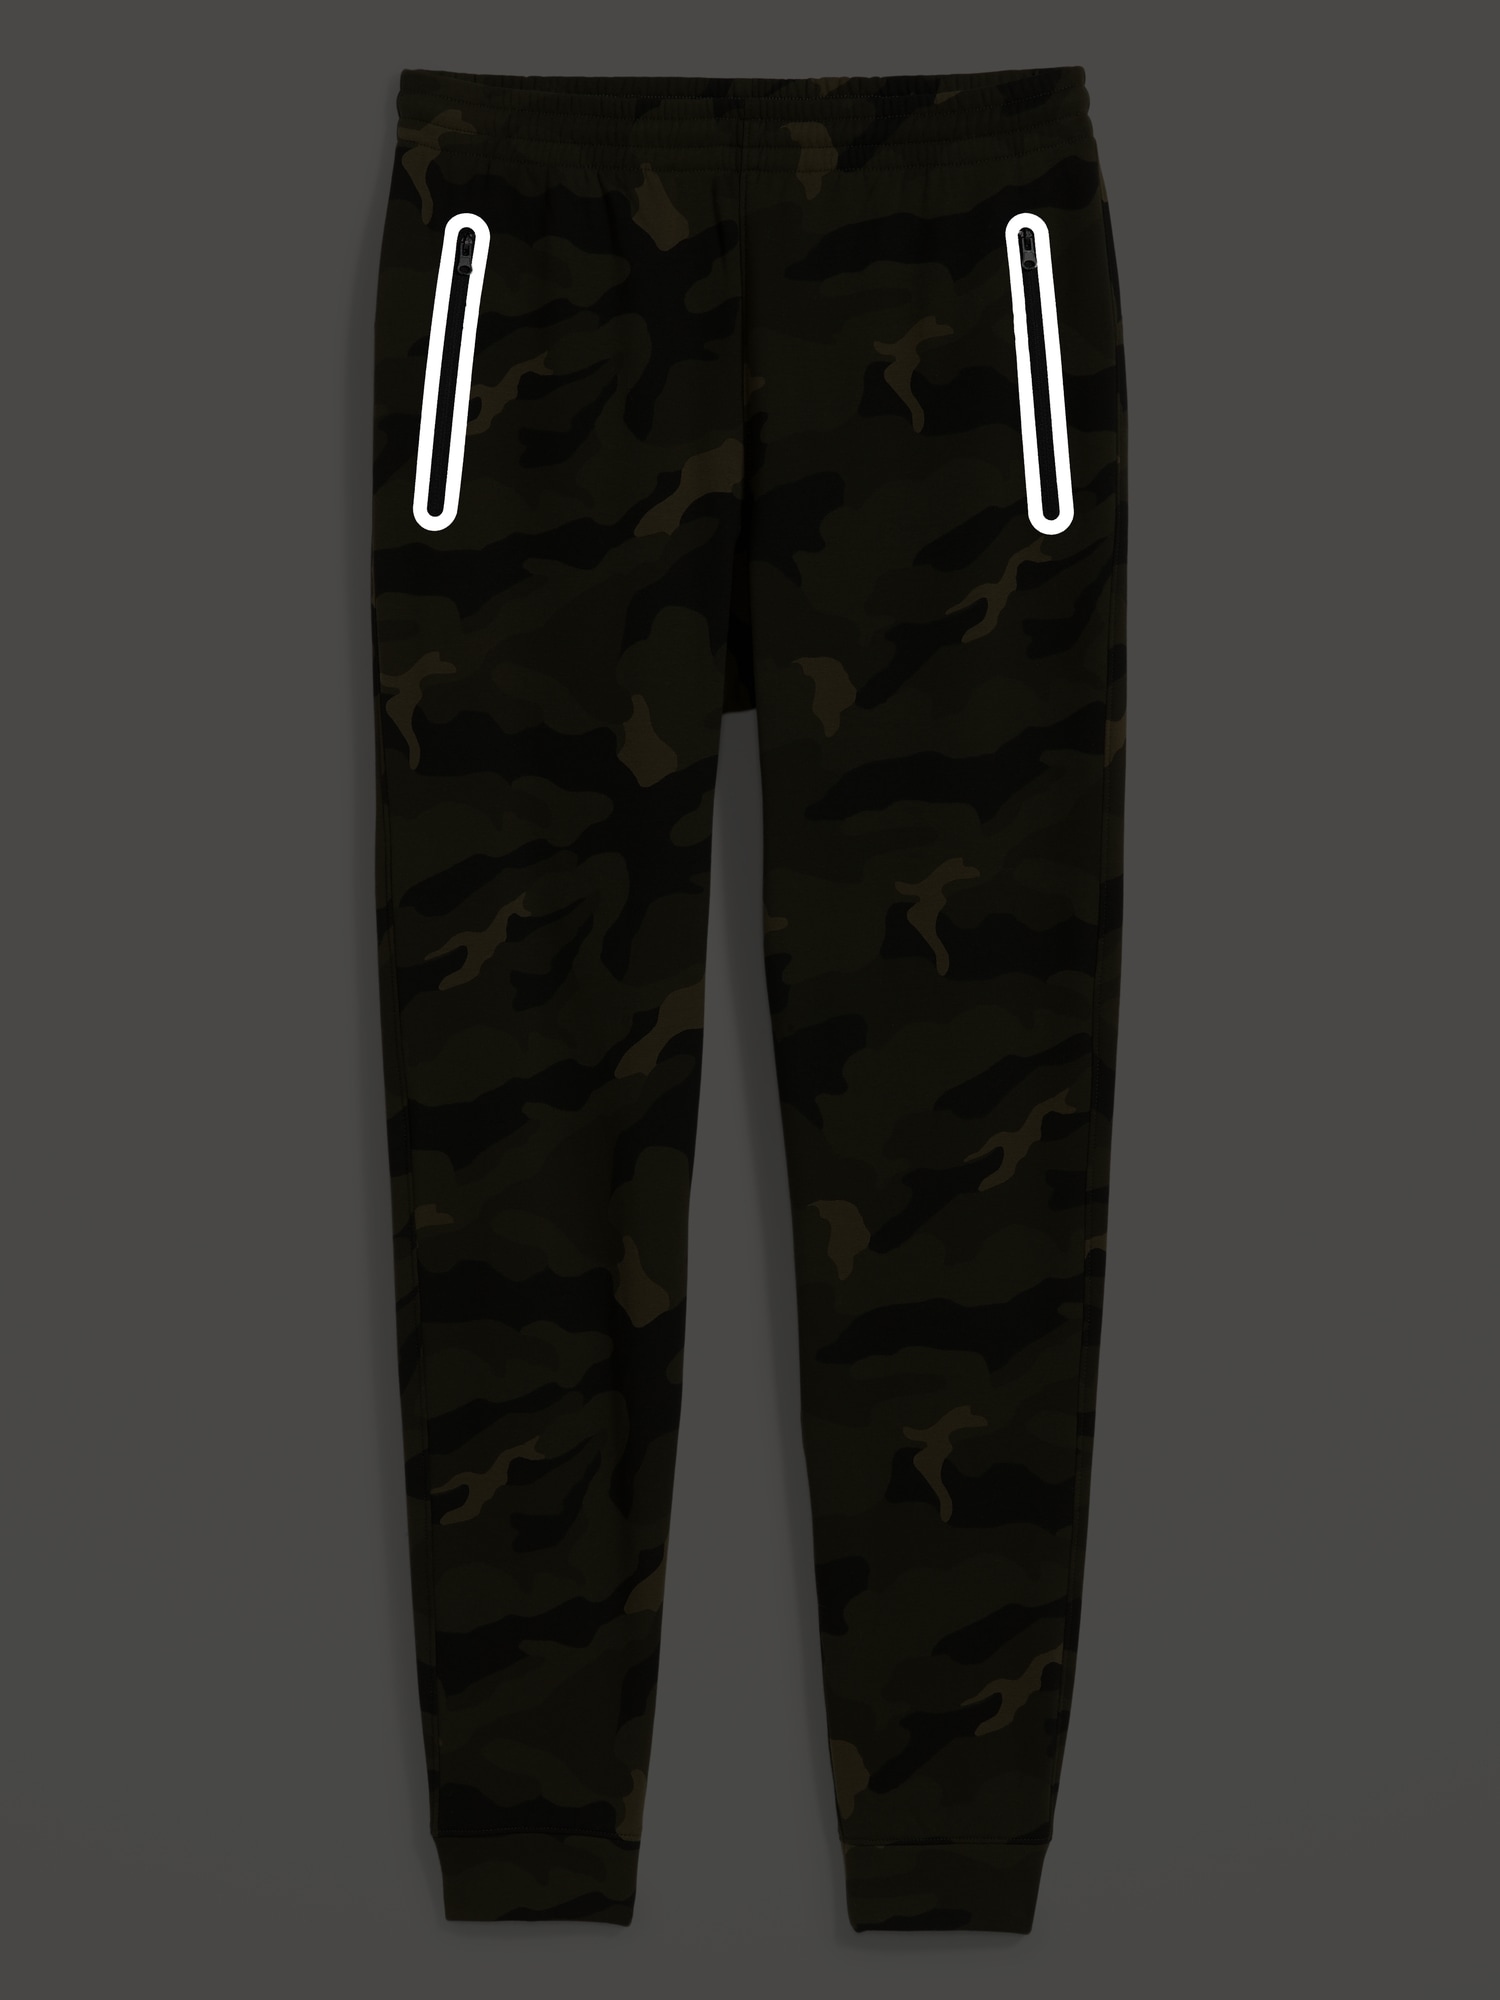 Old Navy, Pants, Nwt Black Dynamic Fleece Jogger Sweatpants For Men  Multiple Sizes